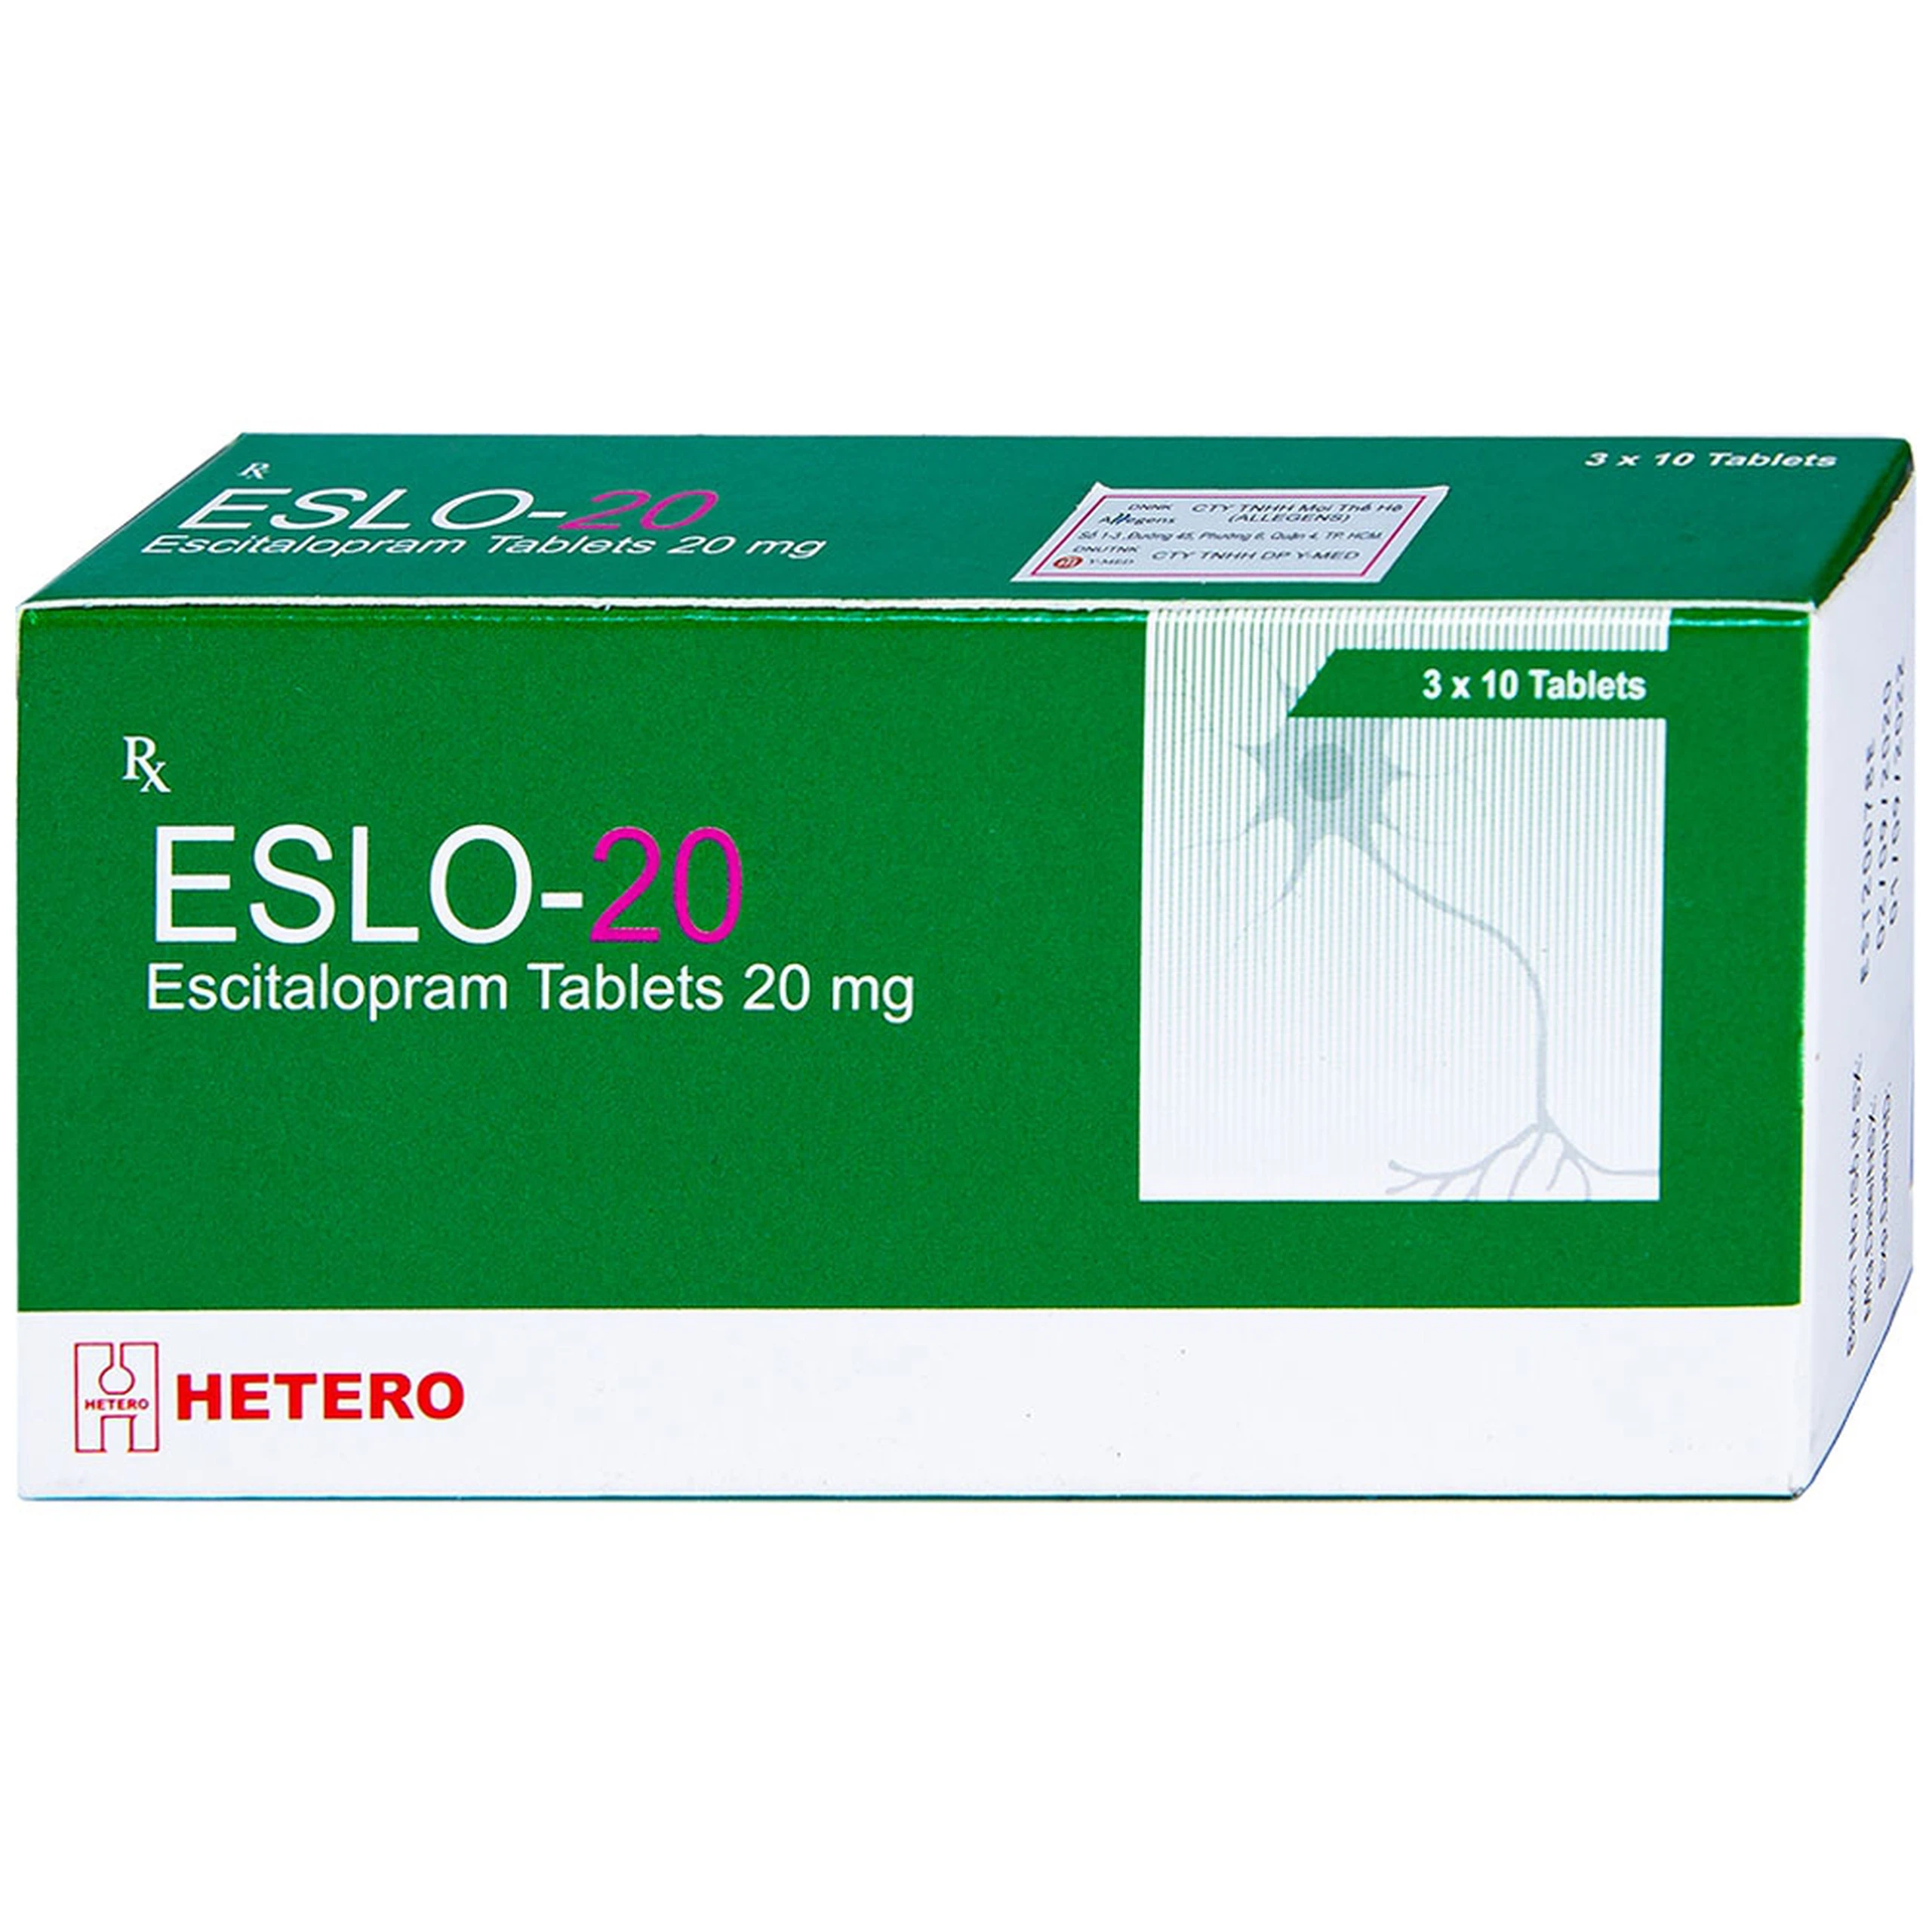 Thuốc Eslo-20 Hetero điều trị trầm cảm, rối loạn lo âu (3 vỉ x 10 viên)